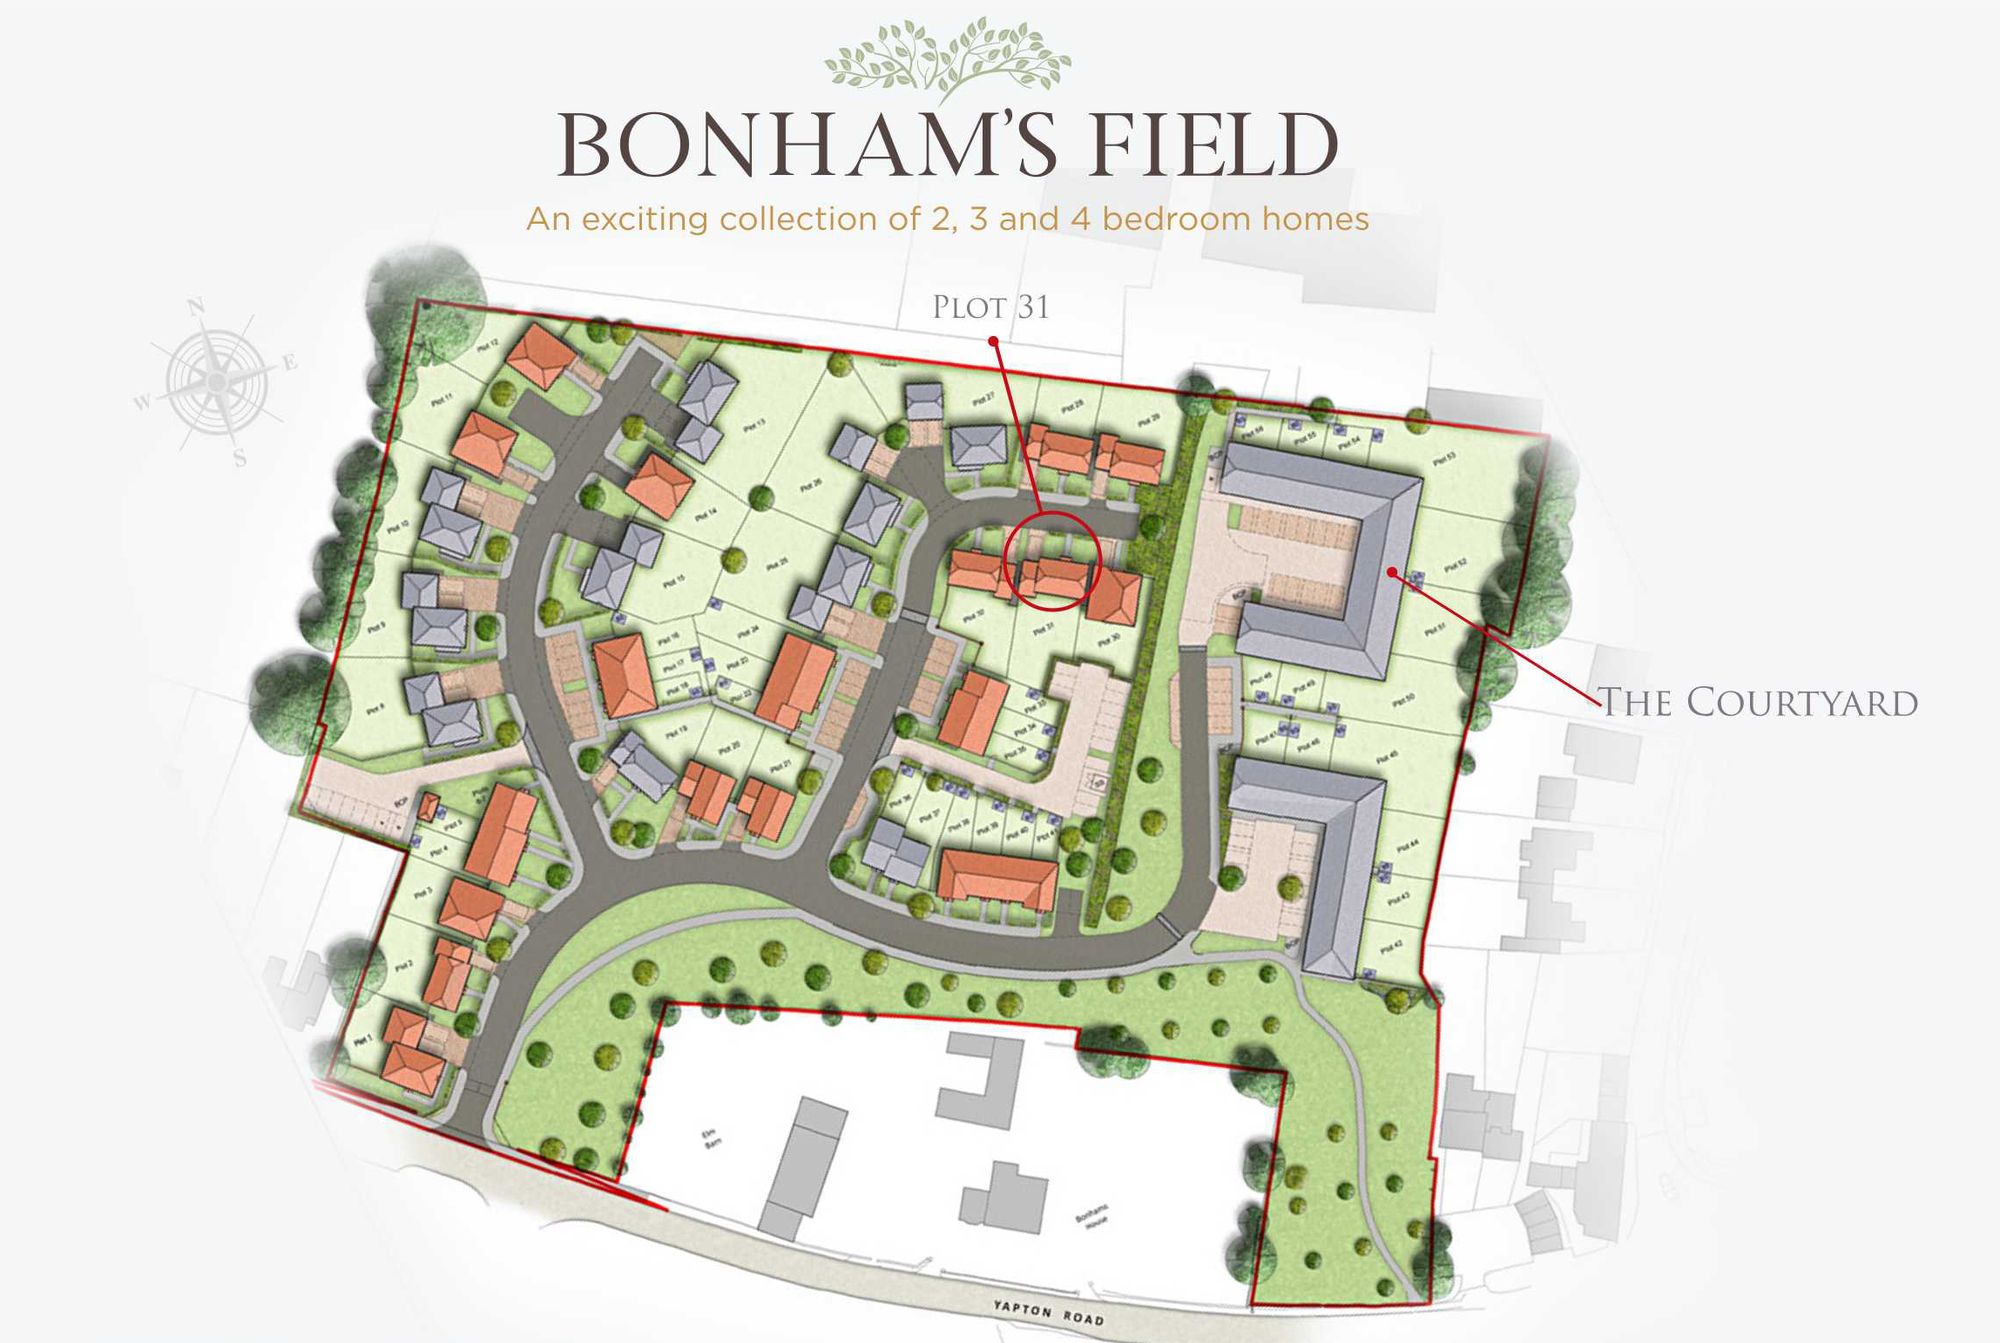 Bonham's Field, Yapton Road, BN18 floorplans